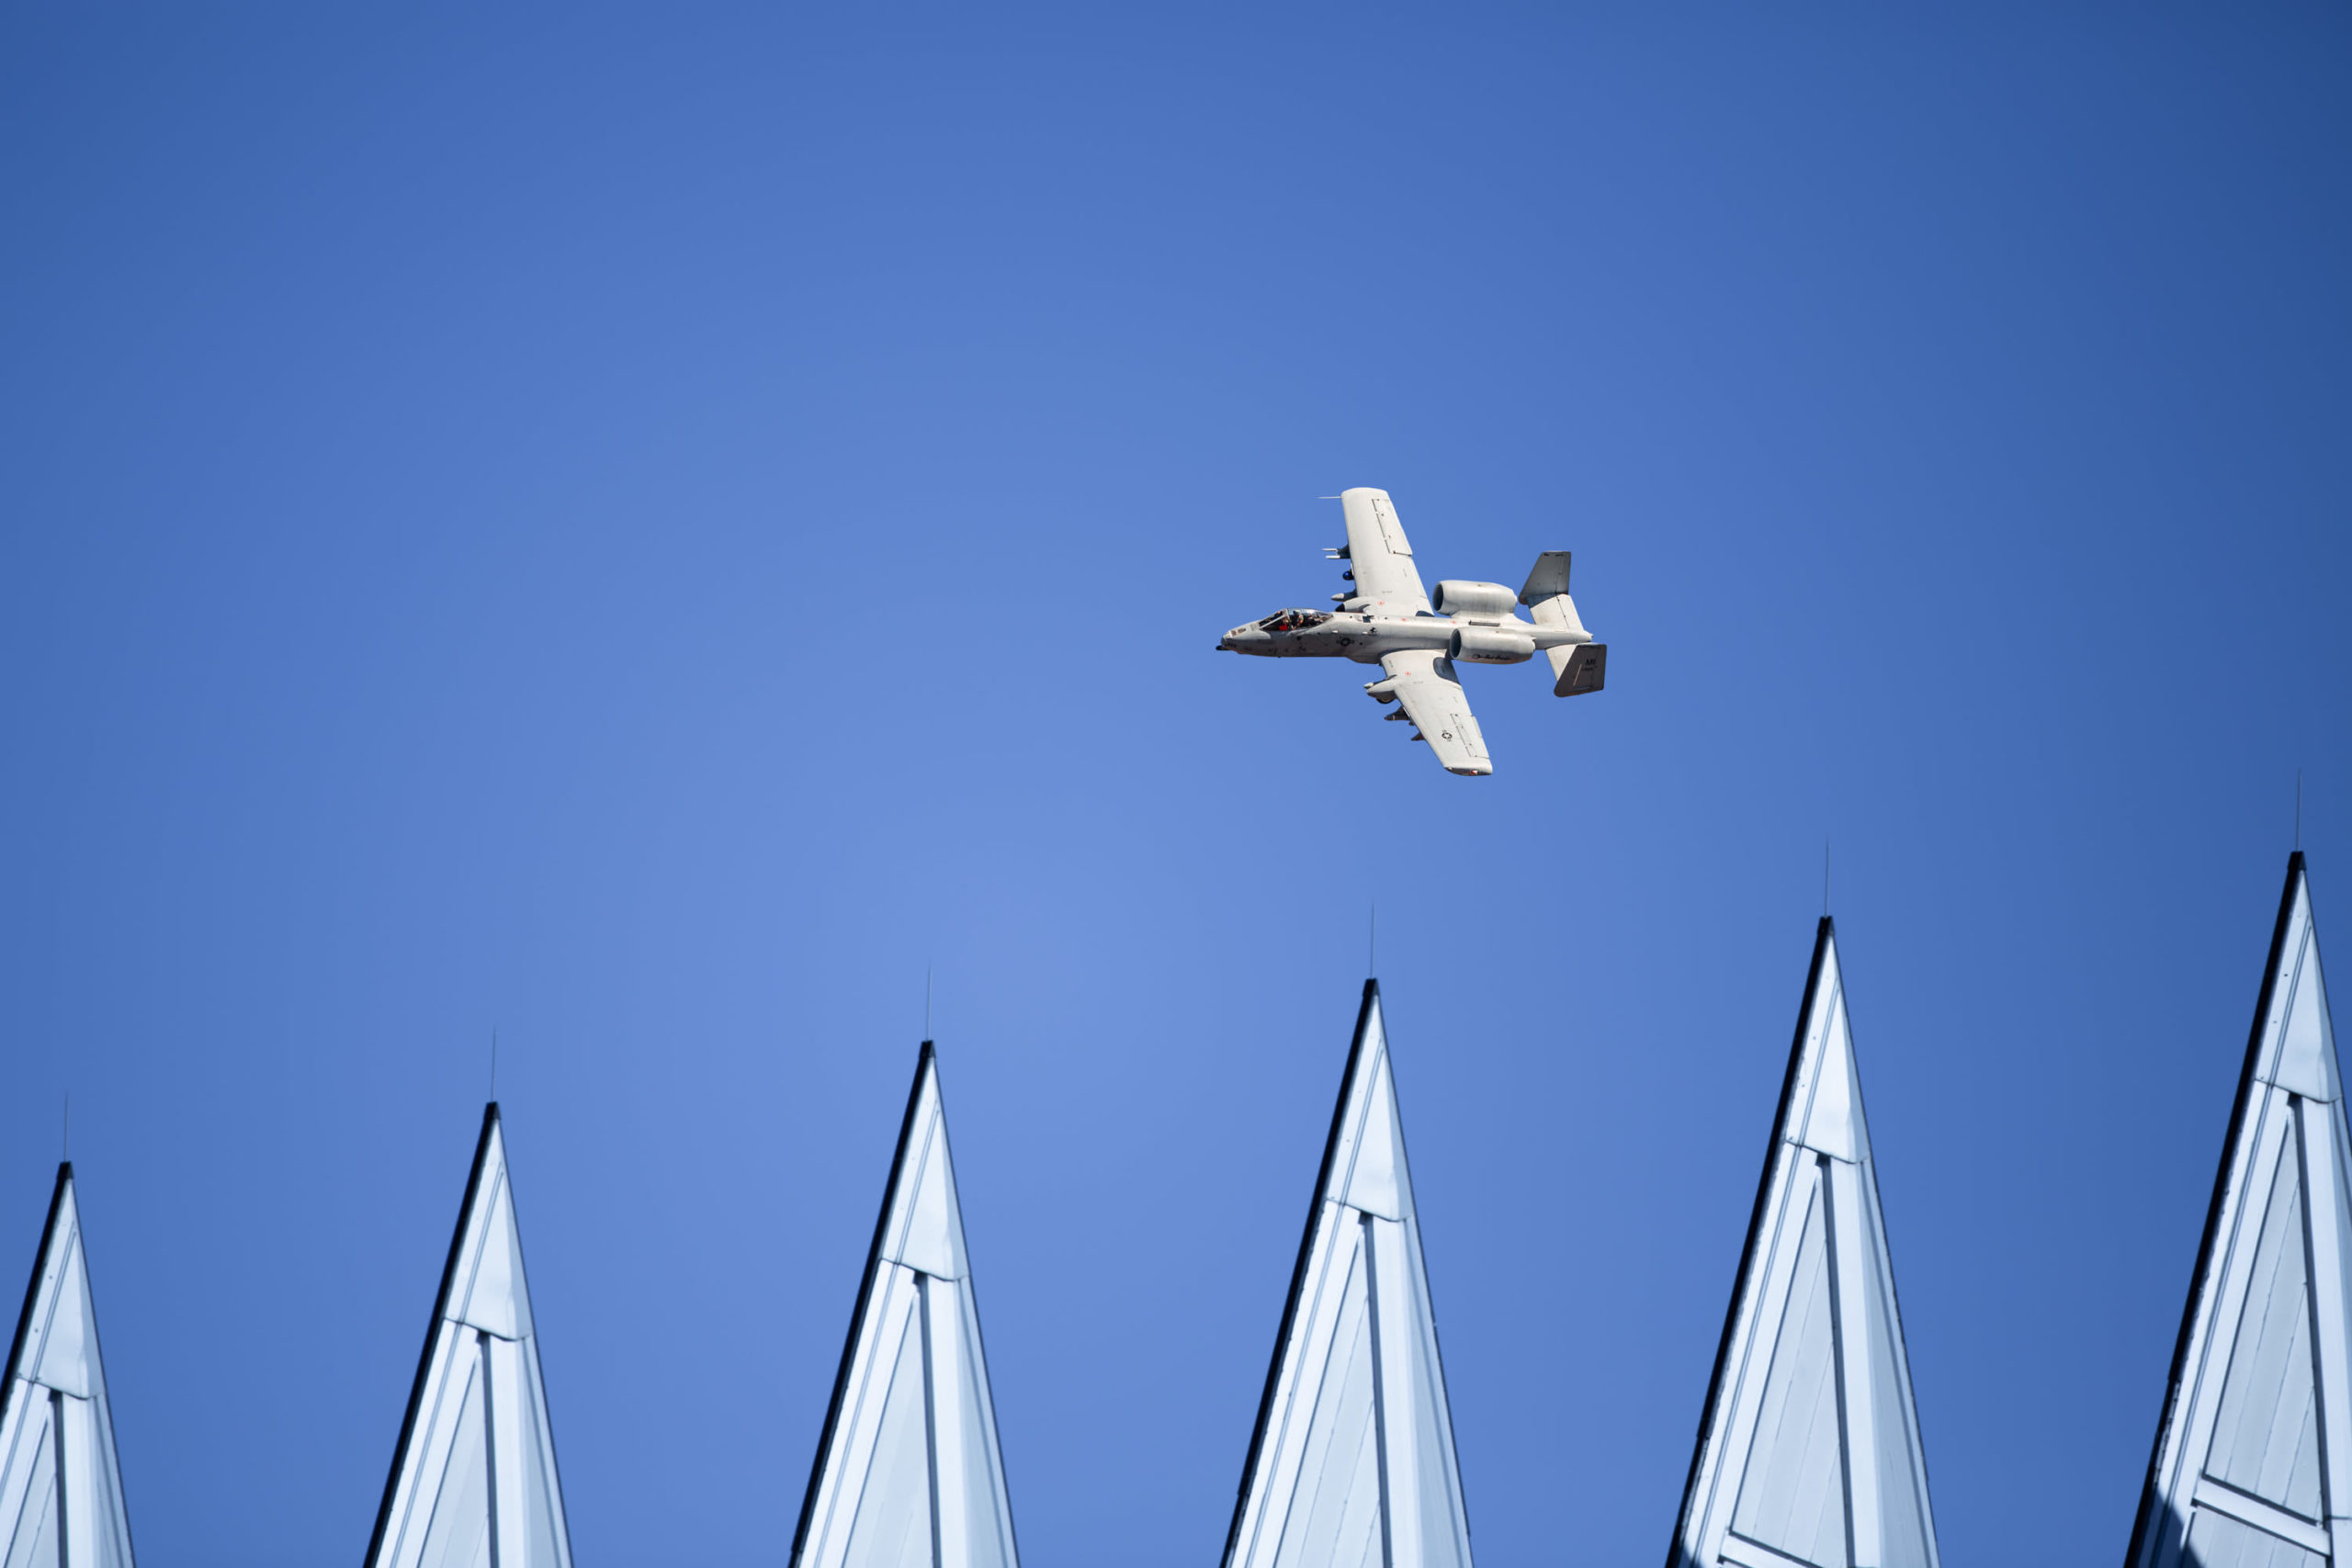 A jet flying in a blue sky.